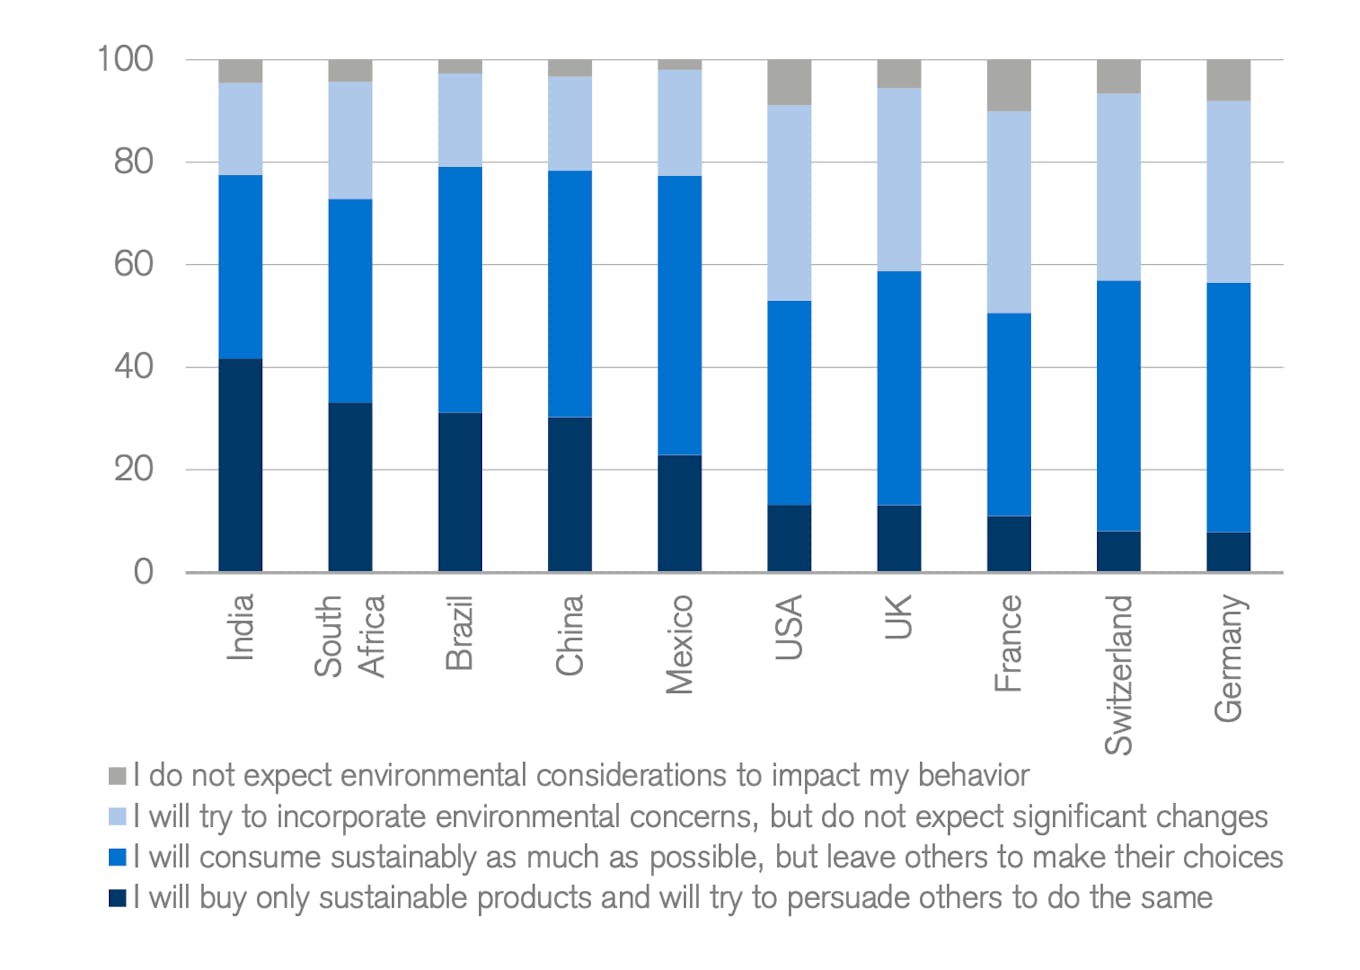 Credit Suisse Sustainable Consumer Survey - consumption habits